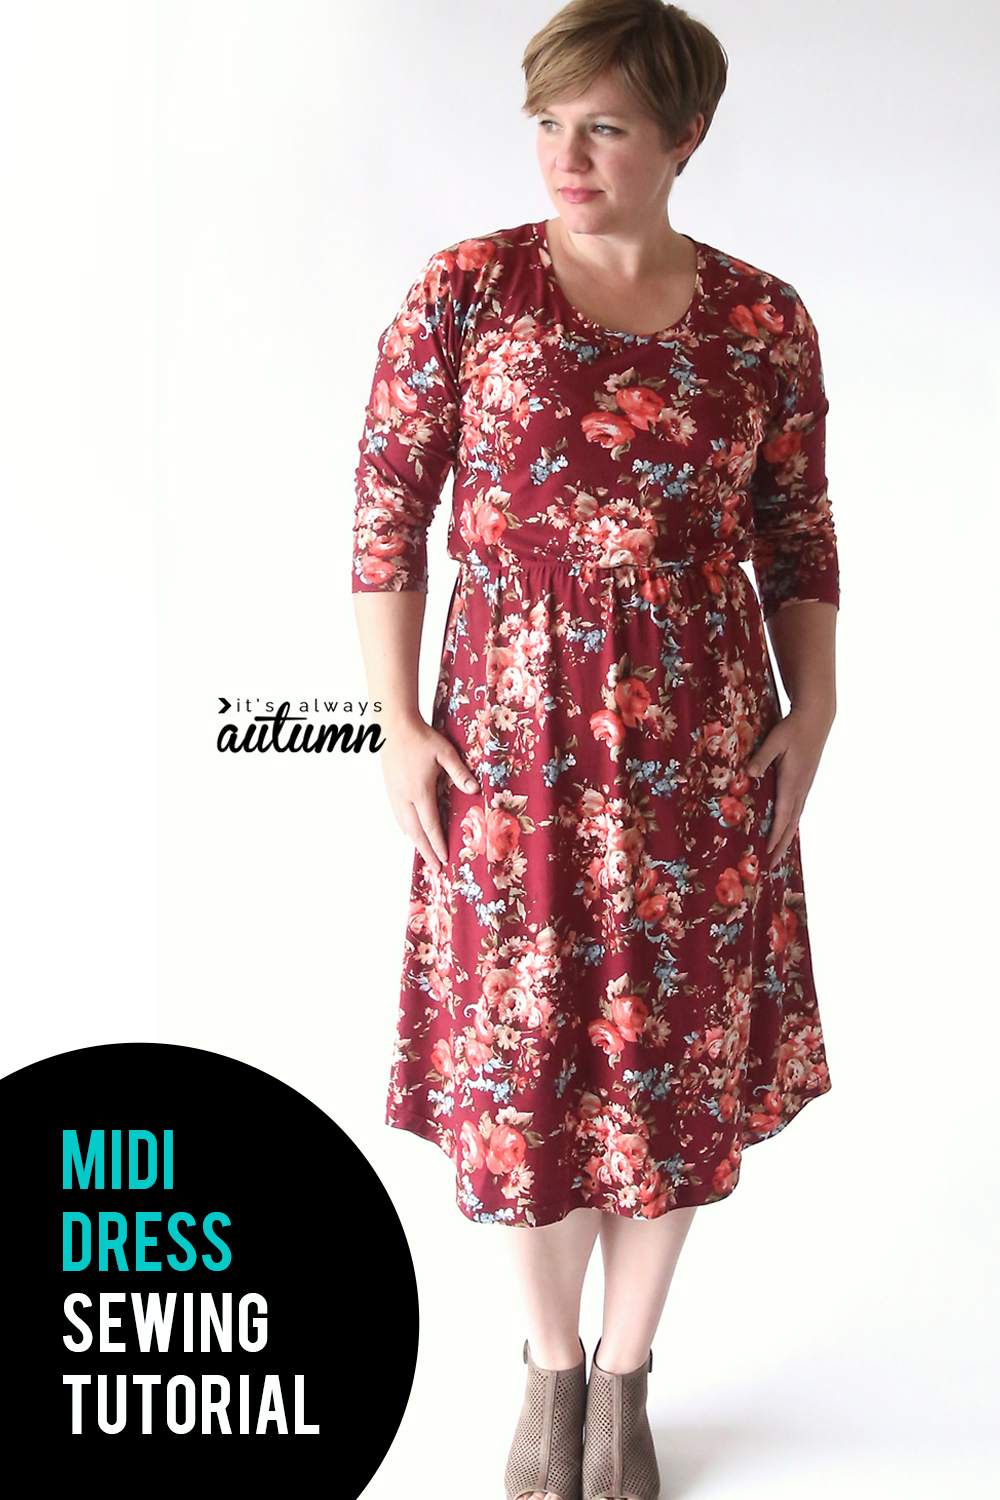 Learn how to make a cute midi dress using a free t-shirt pattern. Midi dress sewing tutorial.